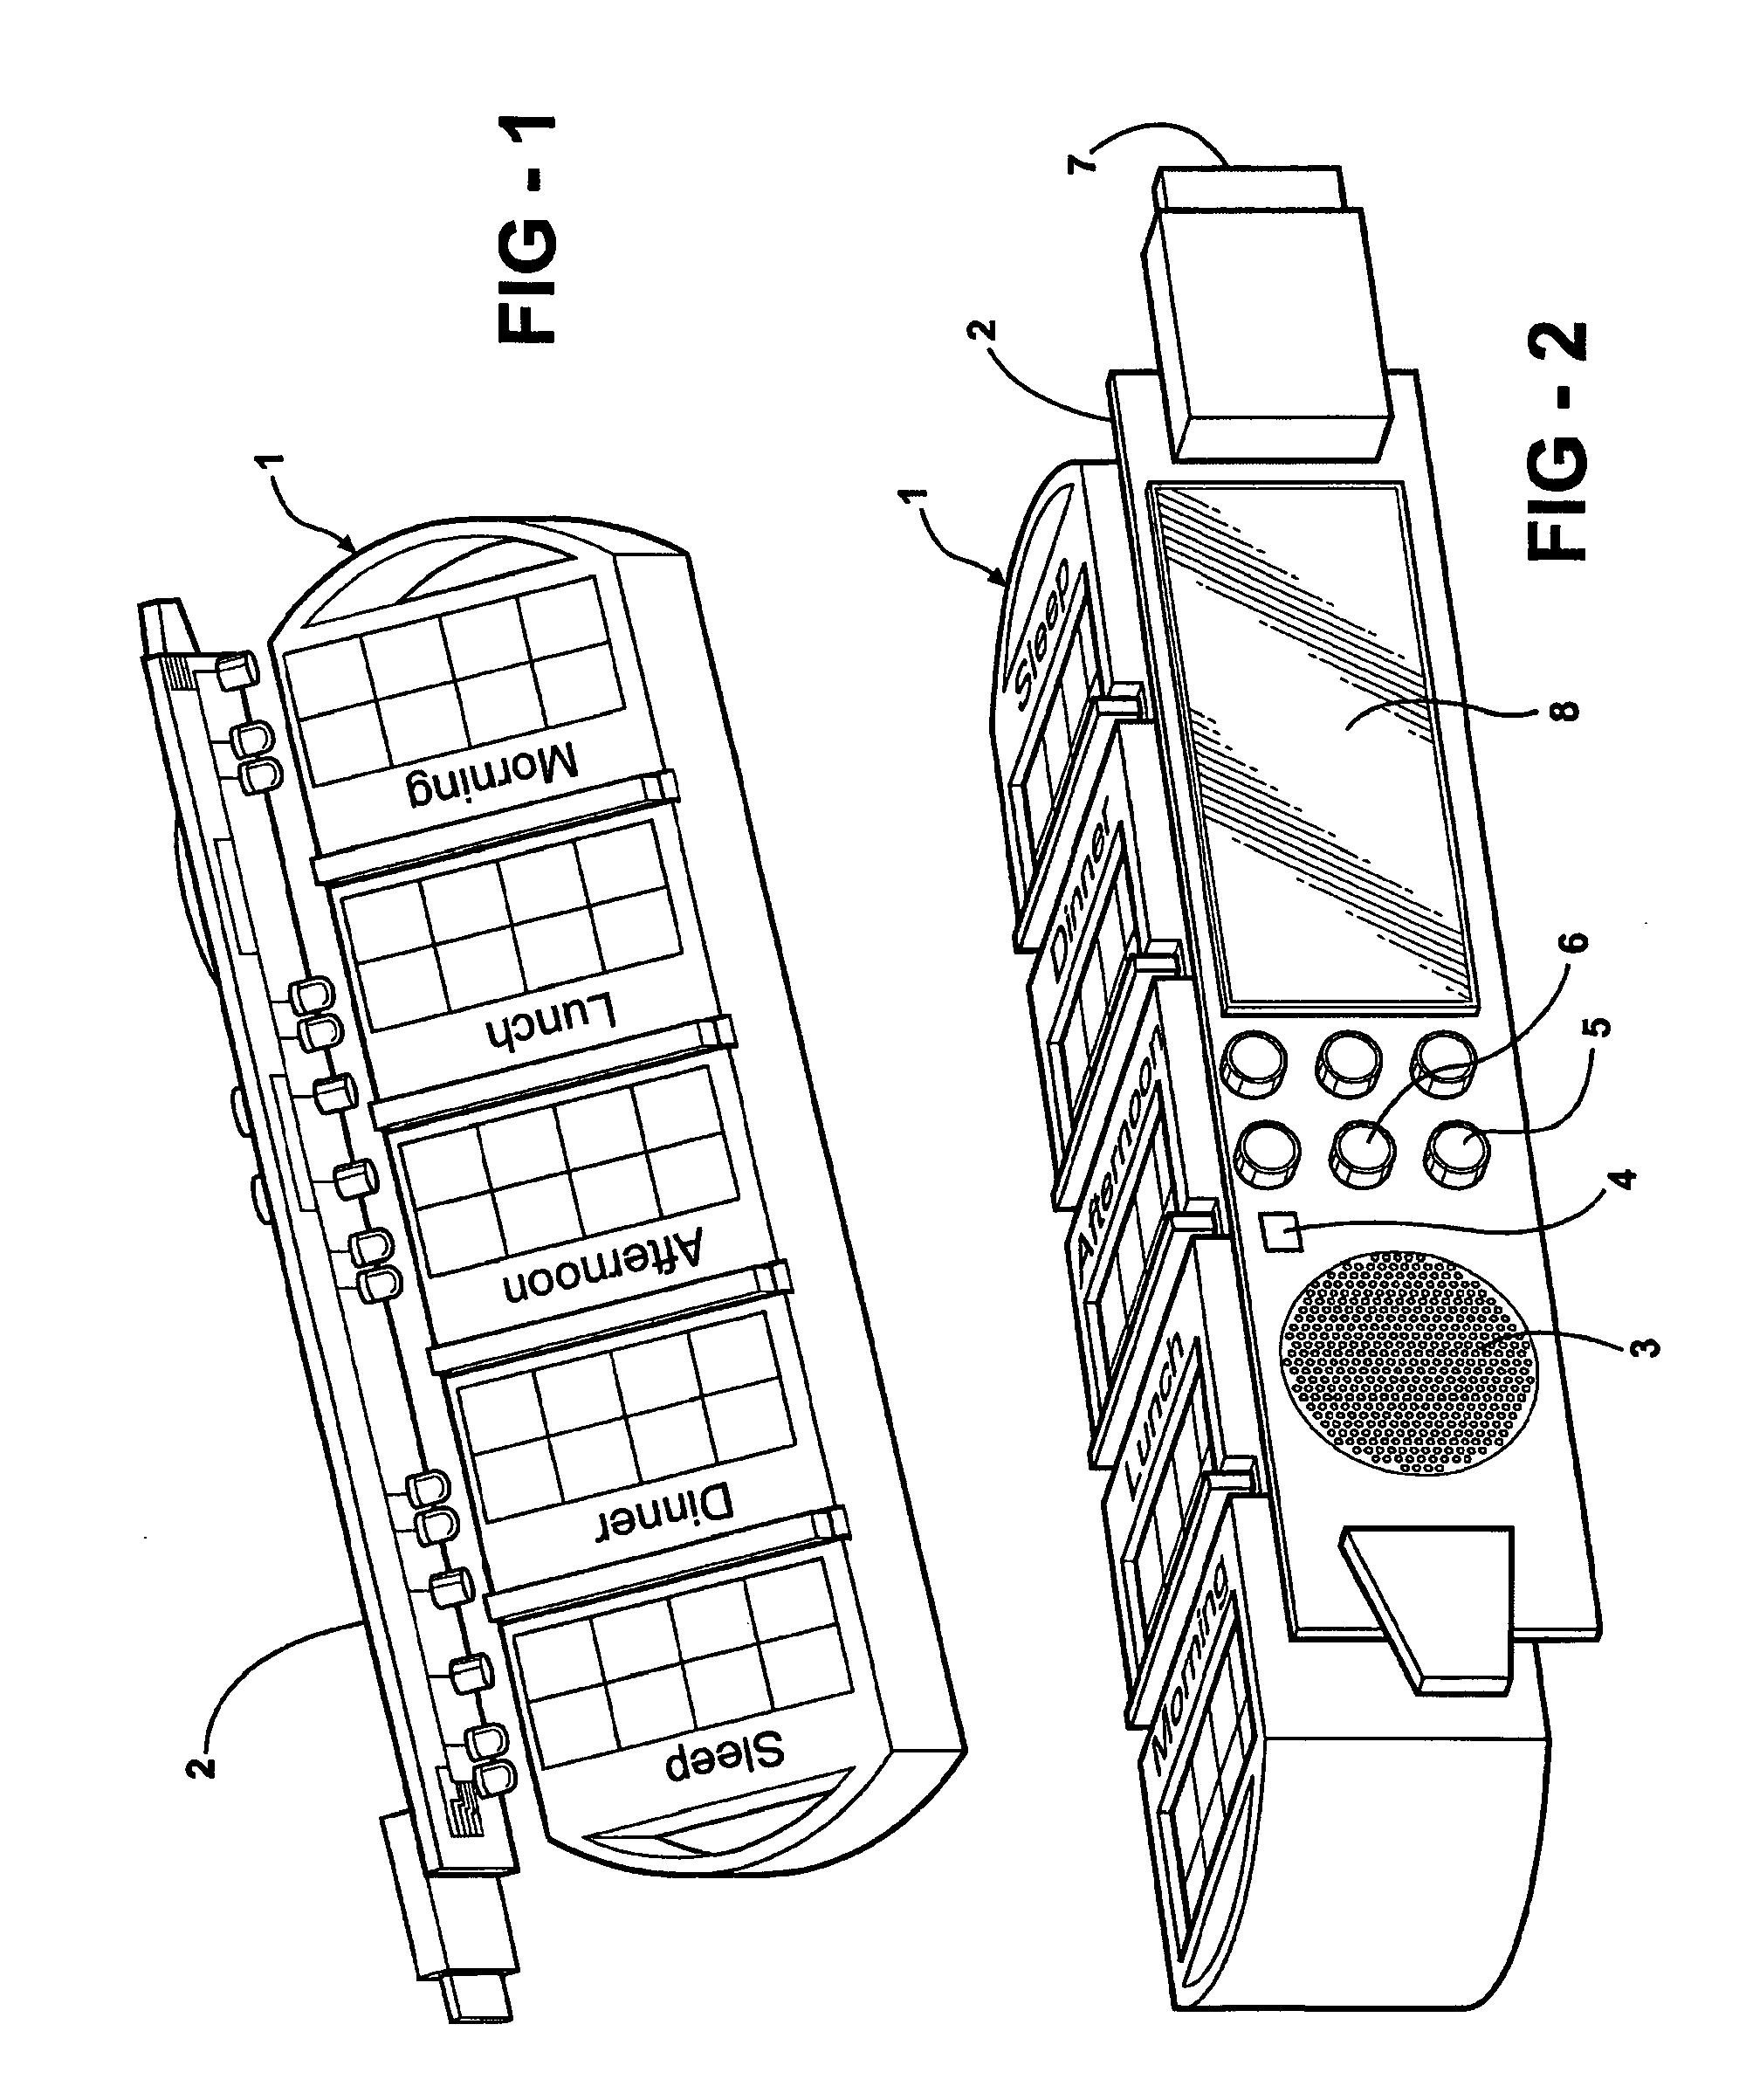 Modular pillbox system